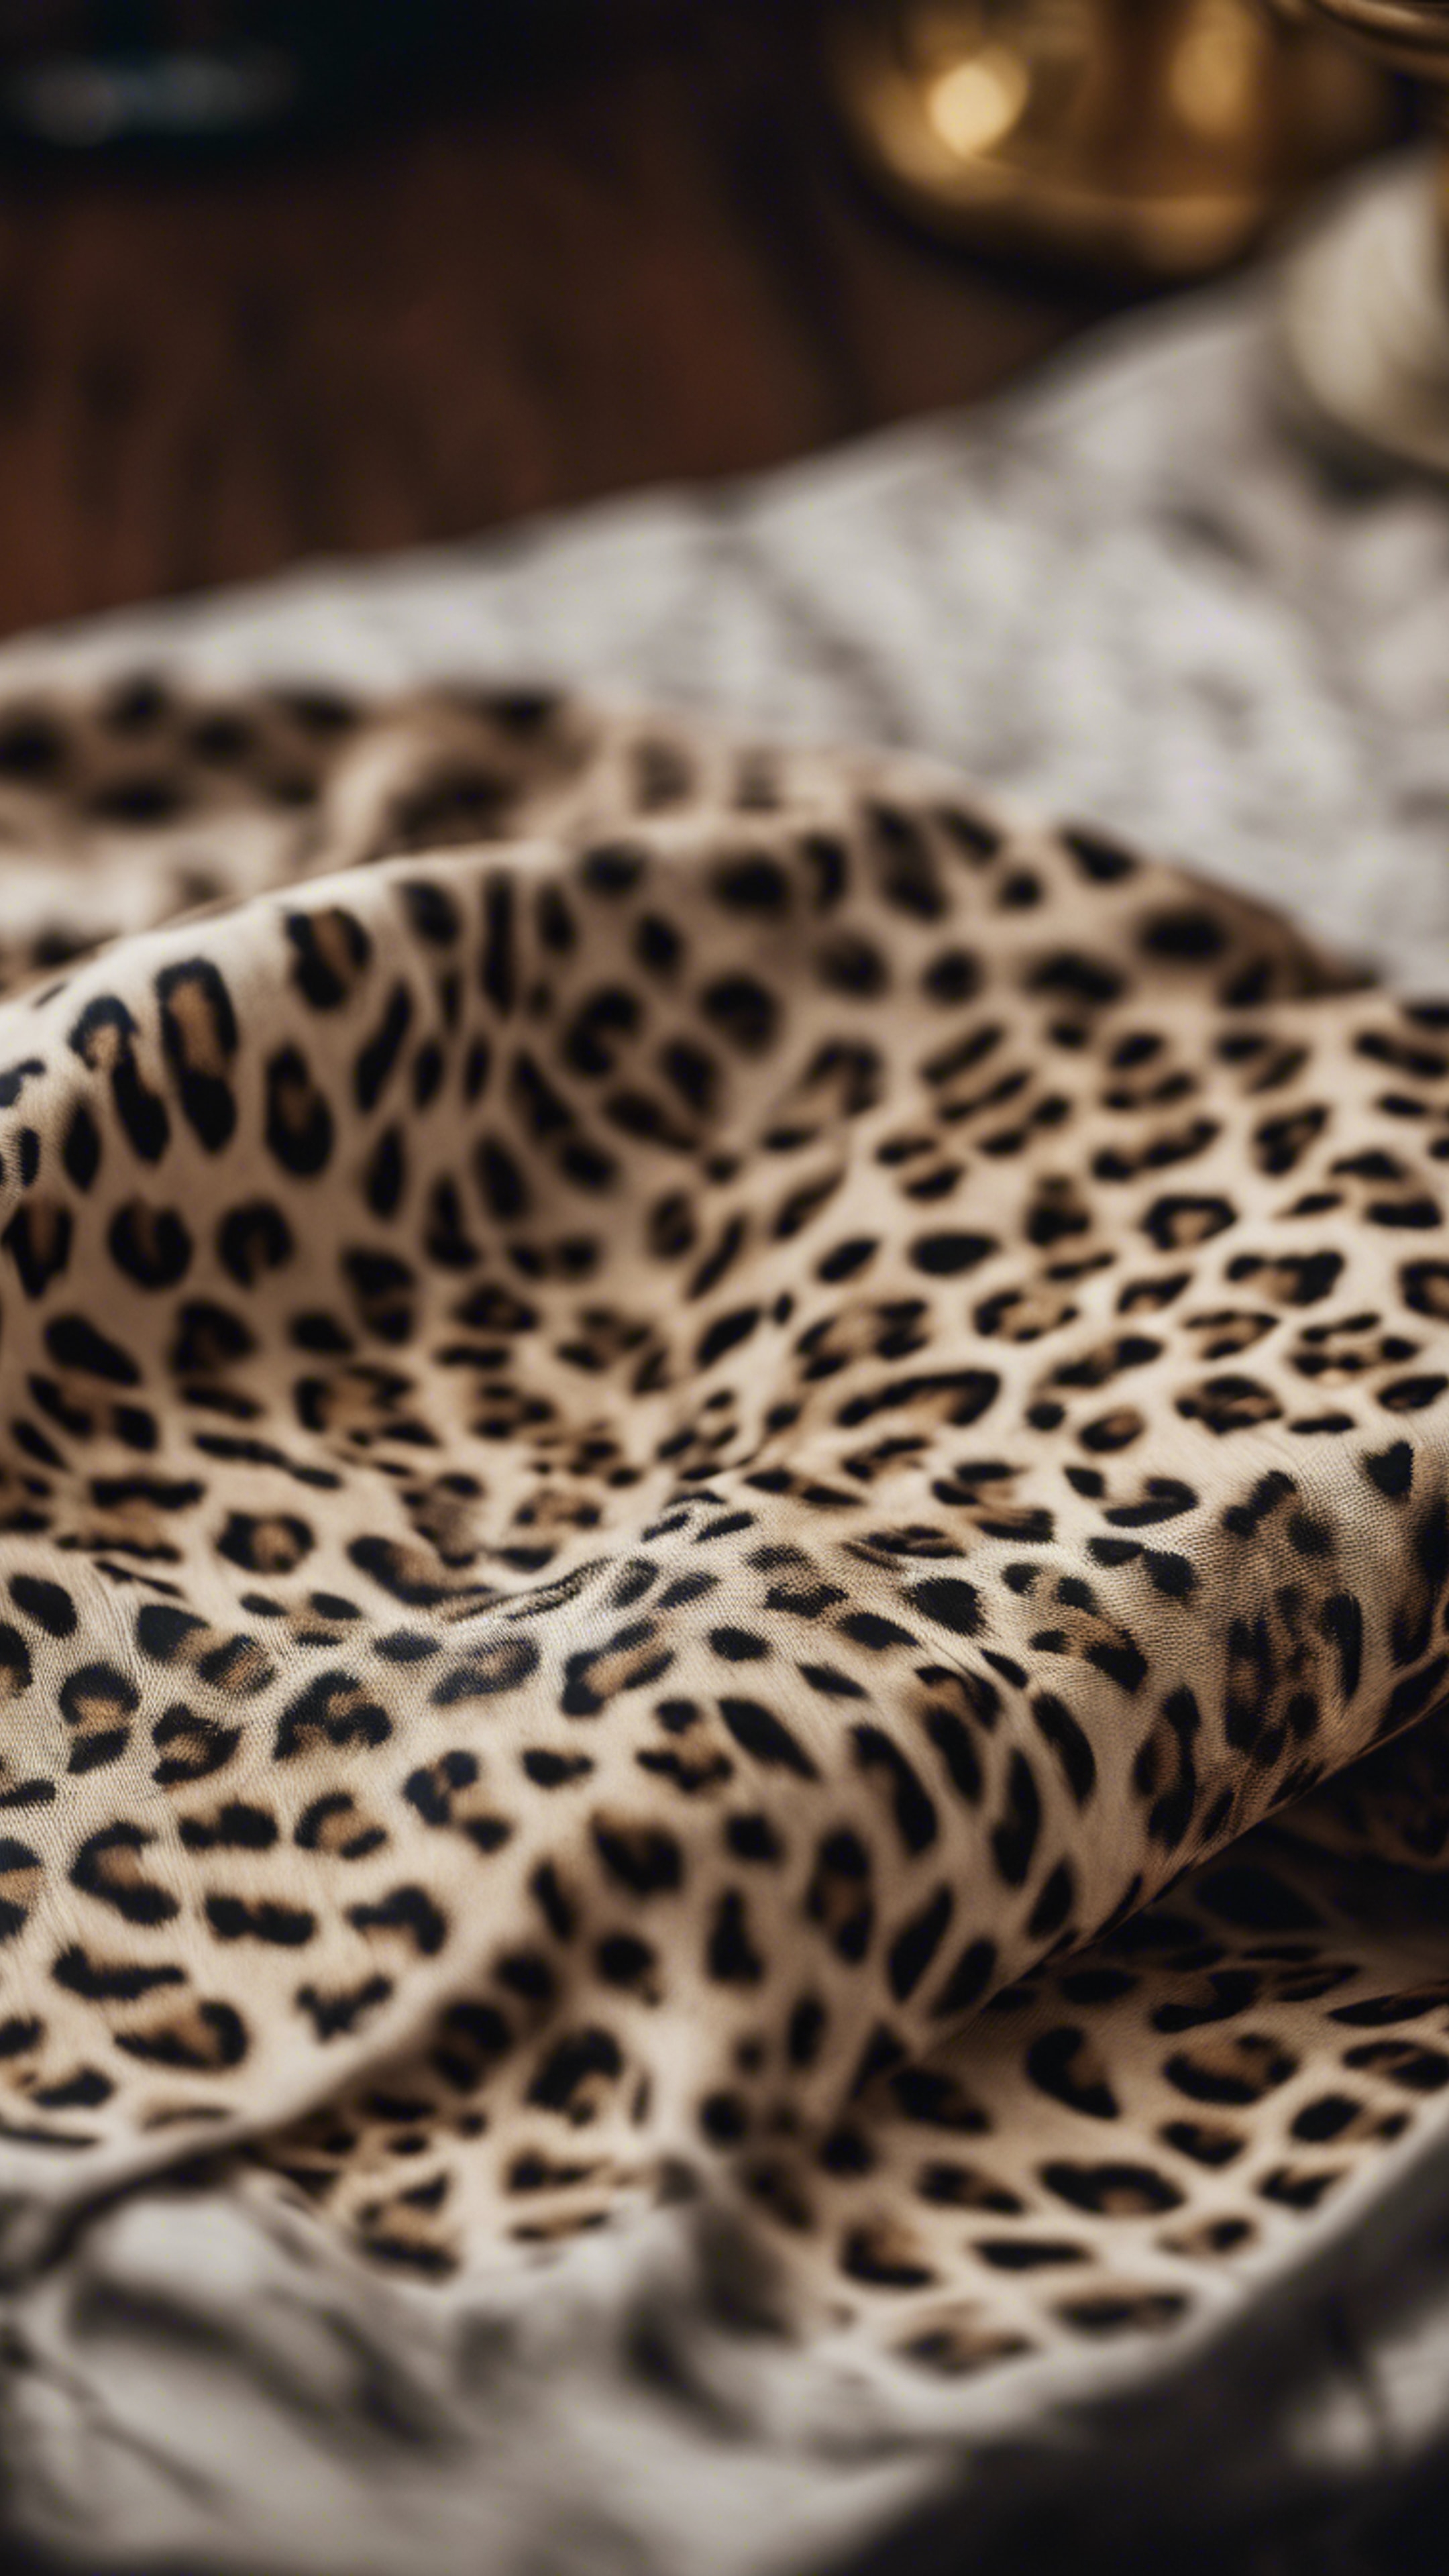 A fabric swatch draped over a table showcasing a unique cheetah print. Wallpaper[045b805c2a574901ba75]